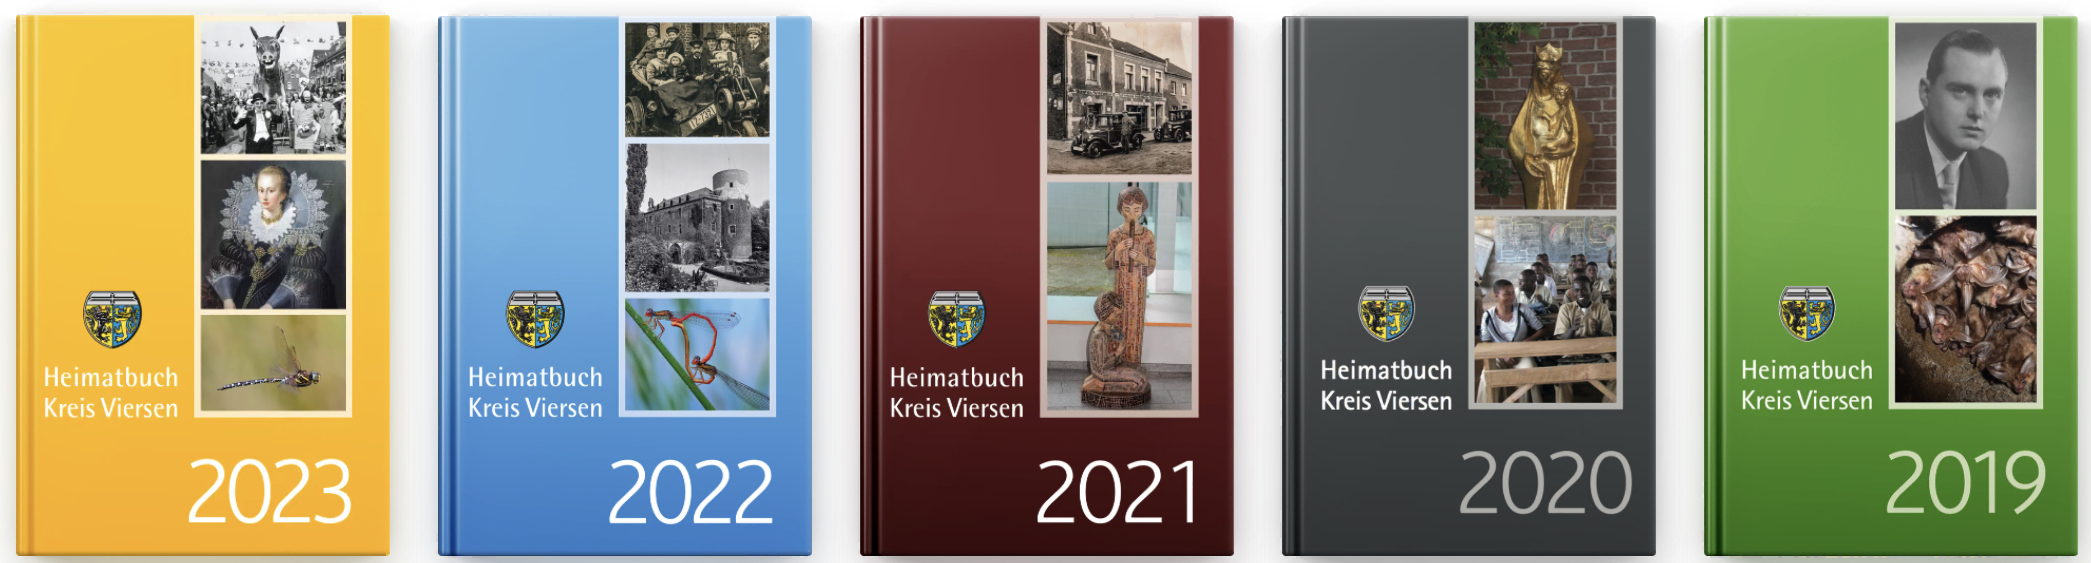 Heimatbuch Kreis Viersen 2019-2023